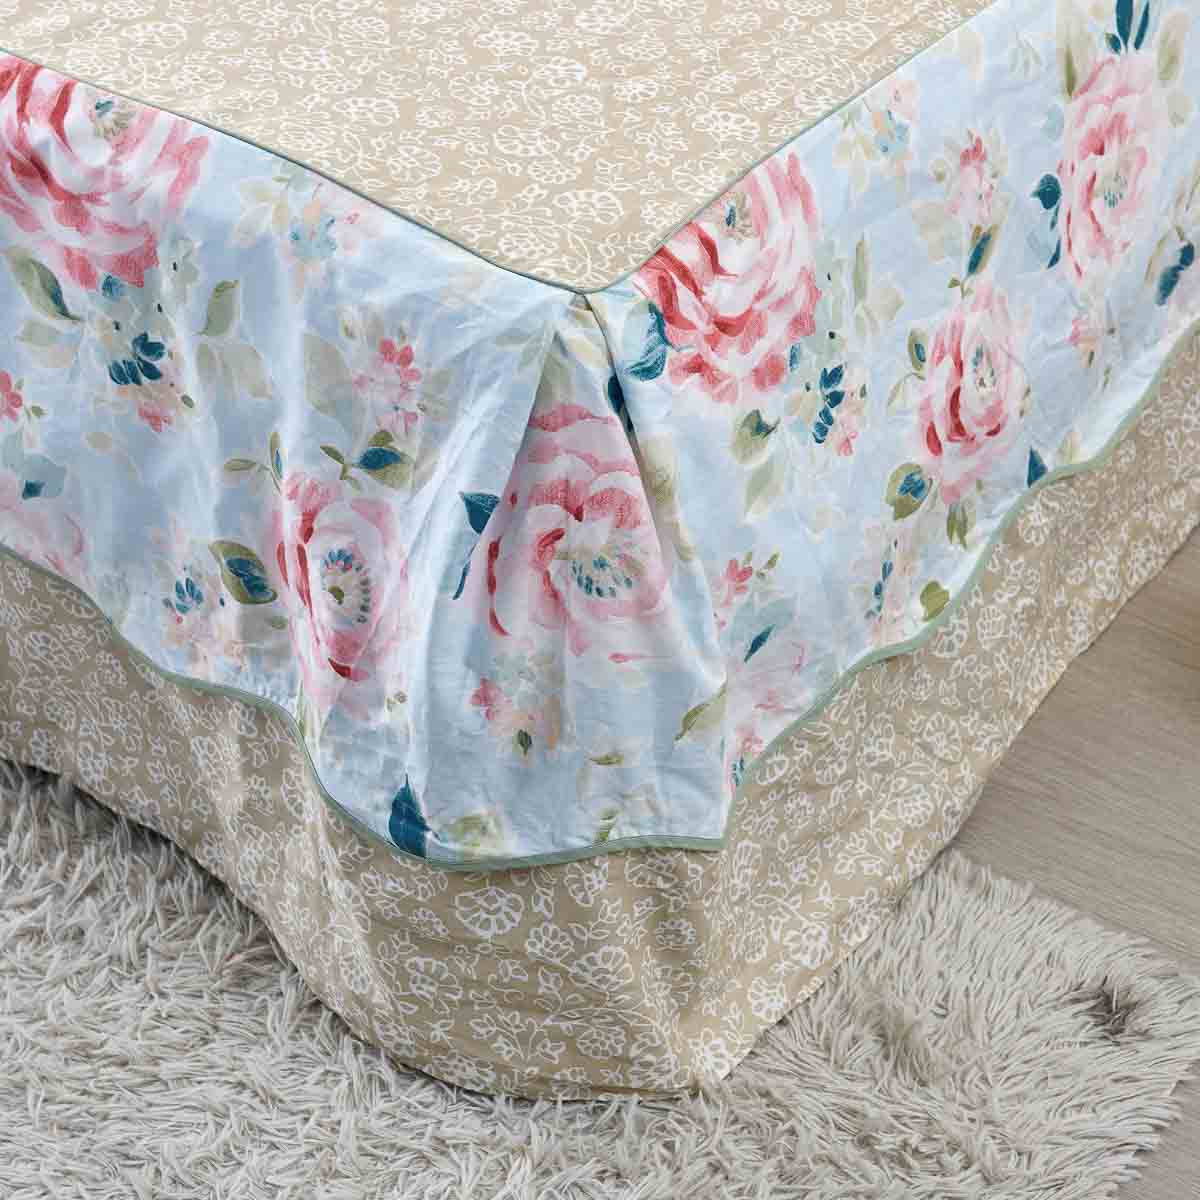 Ardice Floral Cotton Bedskirt Duvet Cover Set